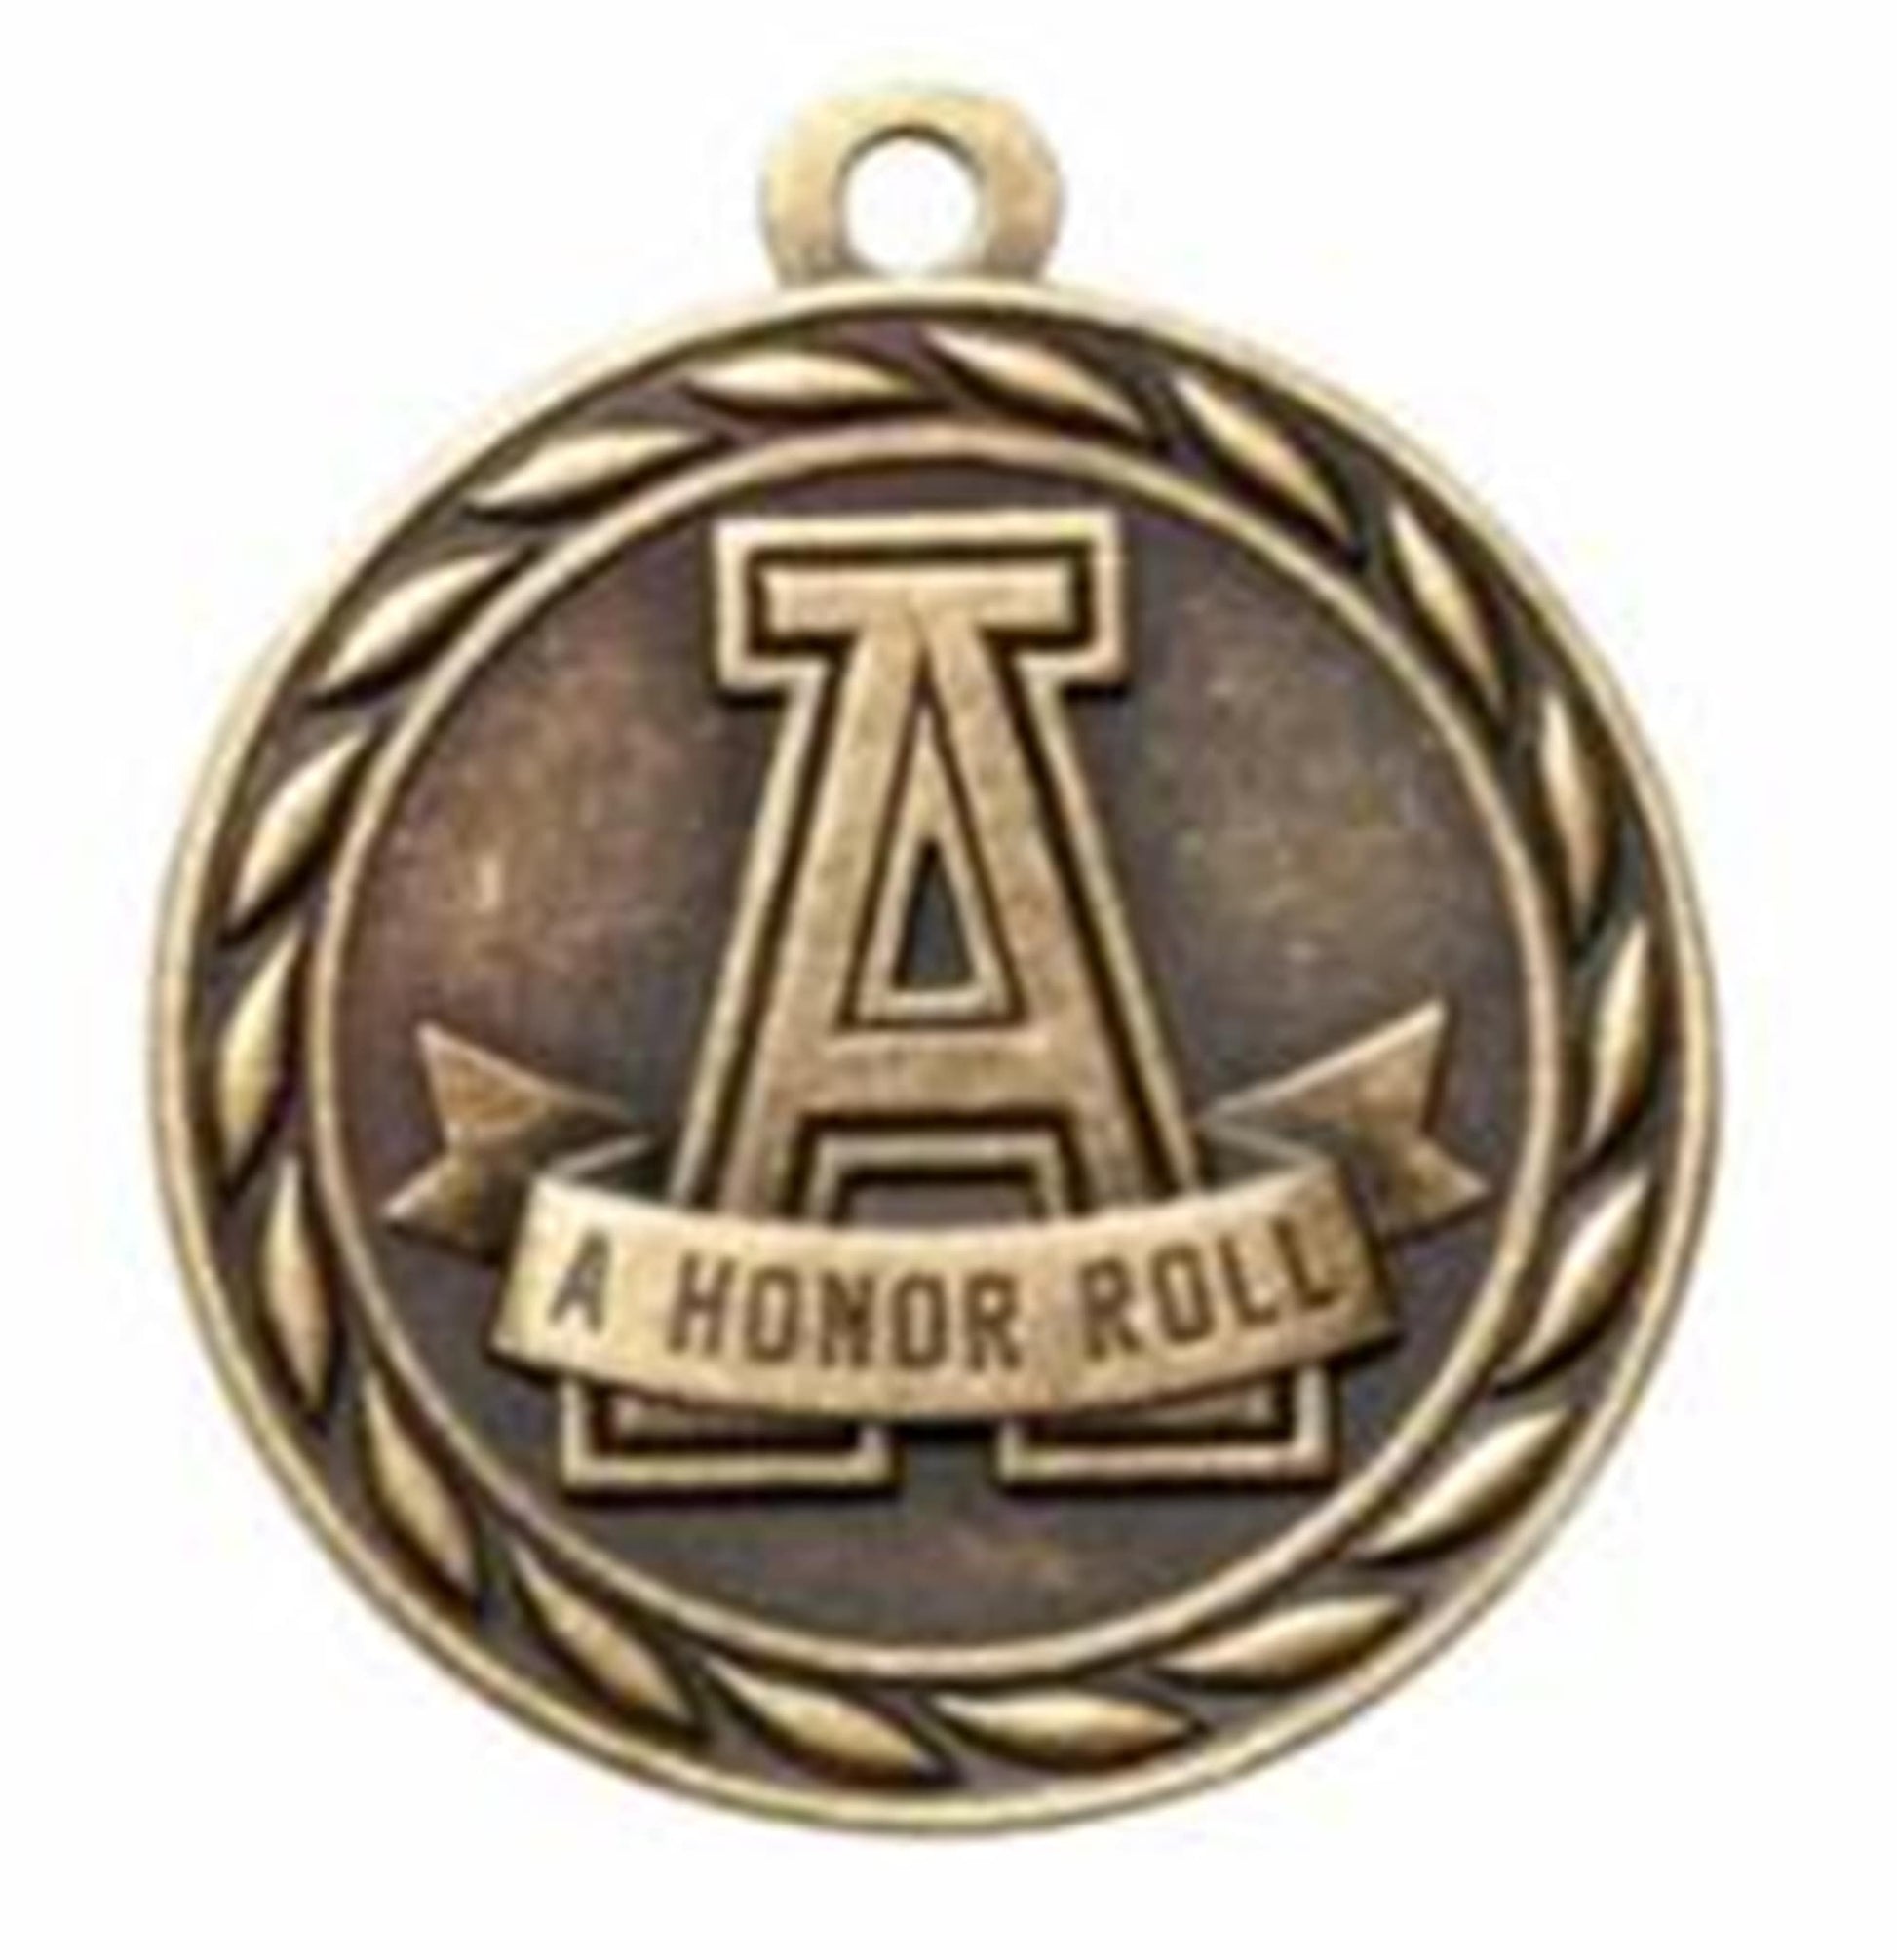 Custom A Honor Roll Medal - Whoa, Jody Boy!